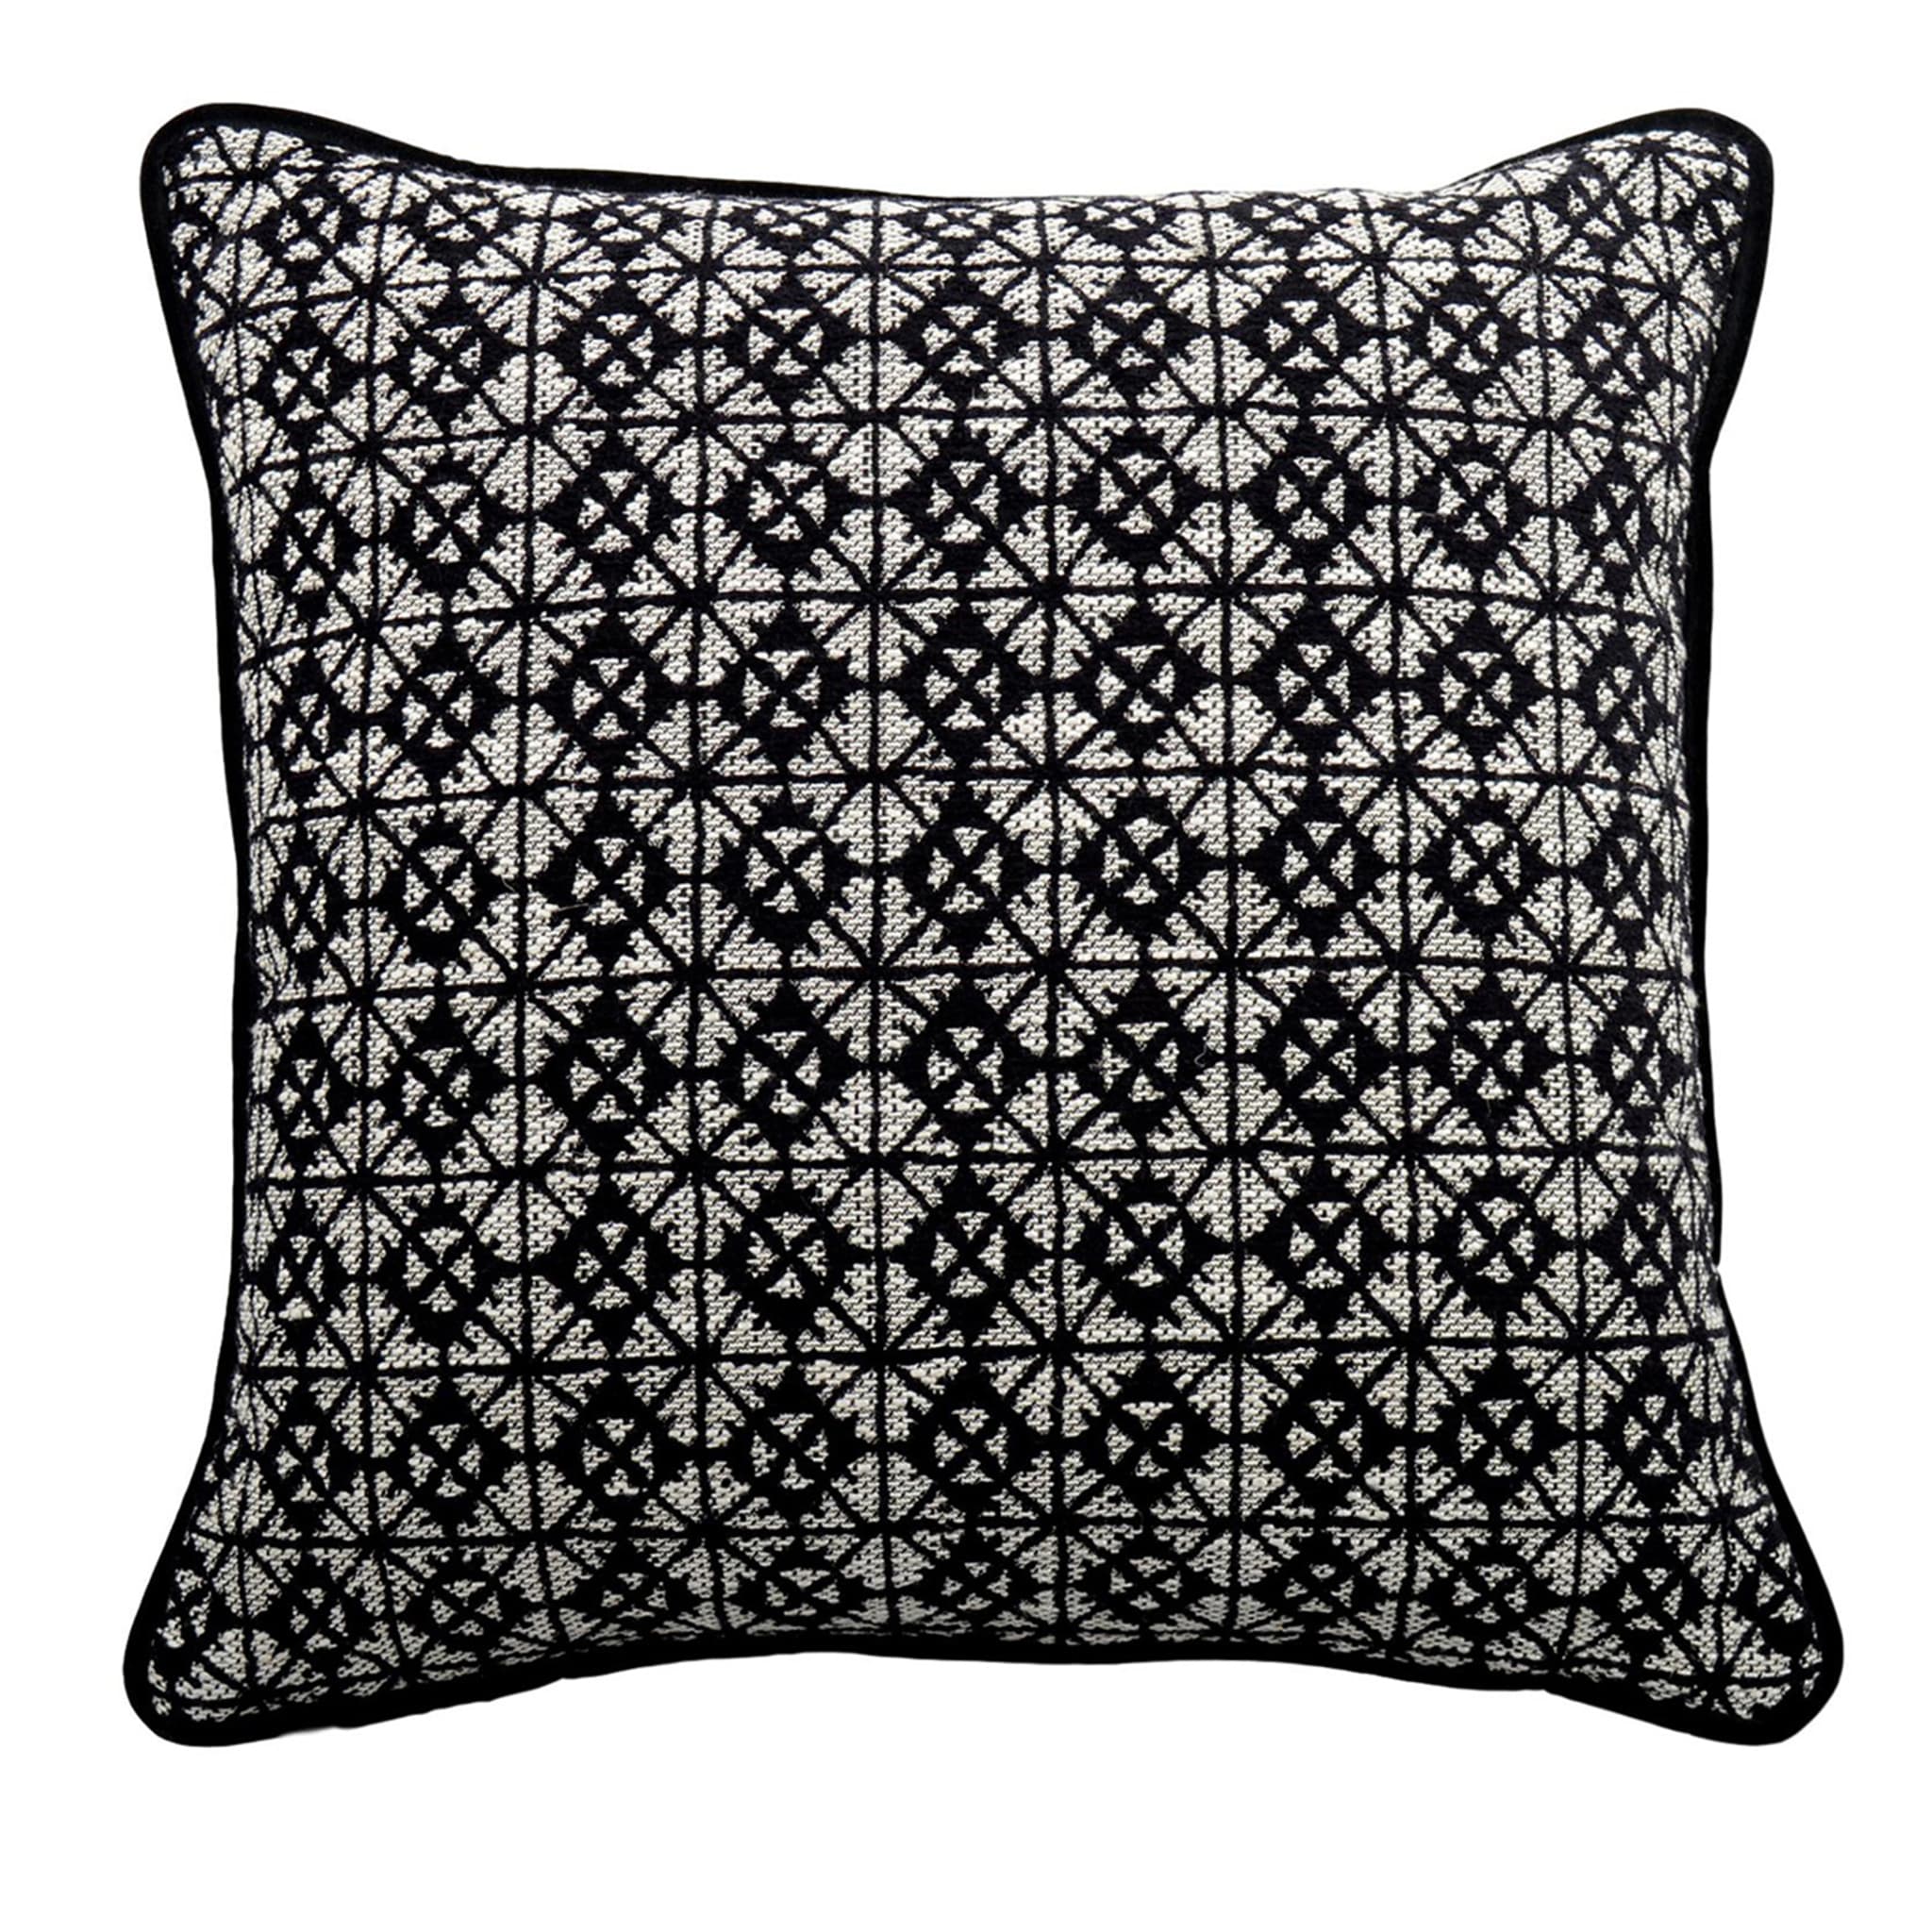 Cojín Carrè blanco y negro en tejido jacquard geométrico - Vista principal